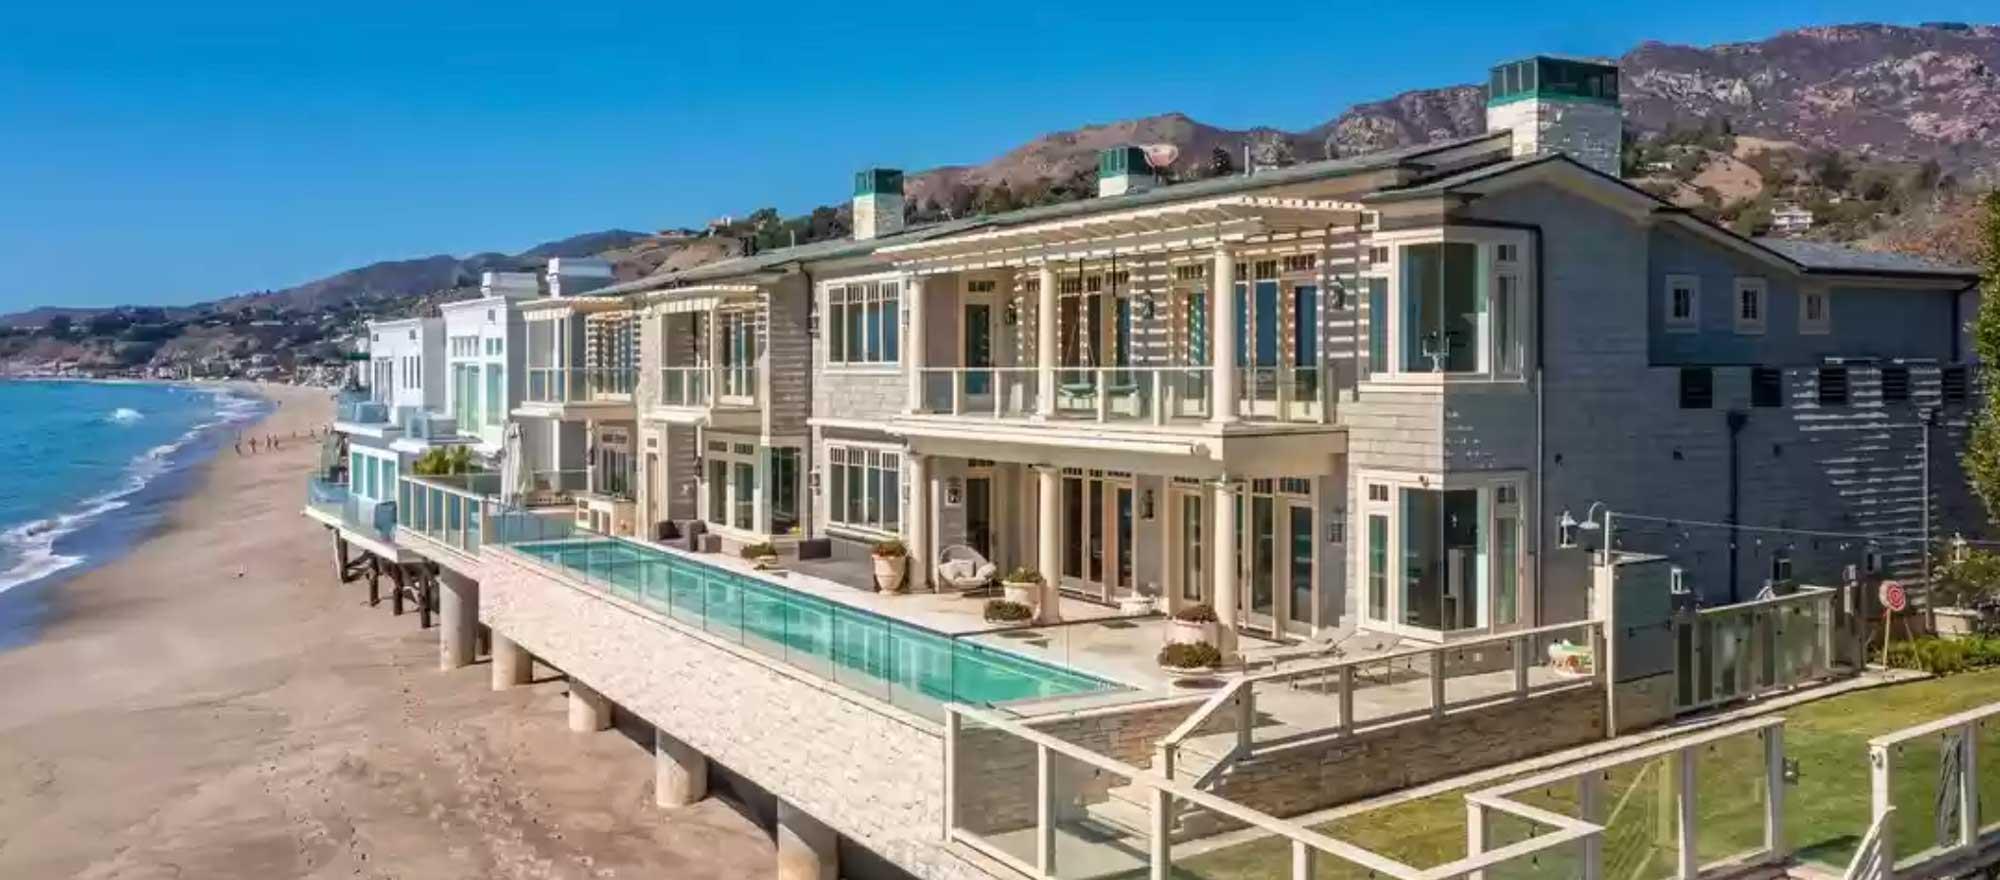 Grant Cardone's Carbon Beach home in Malibu, California